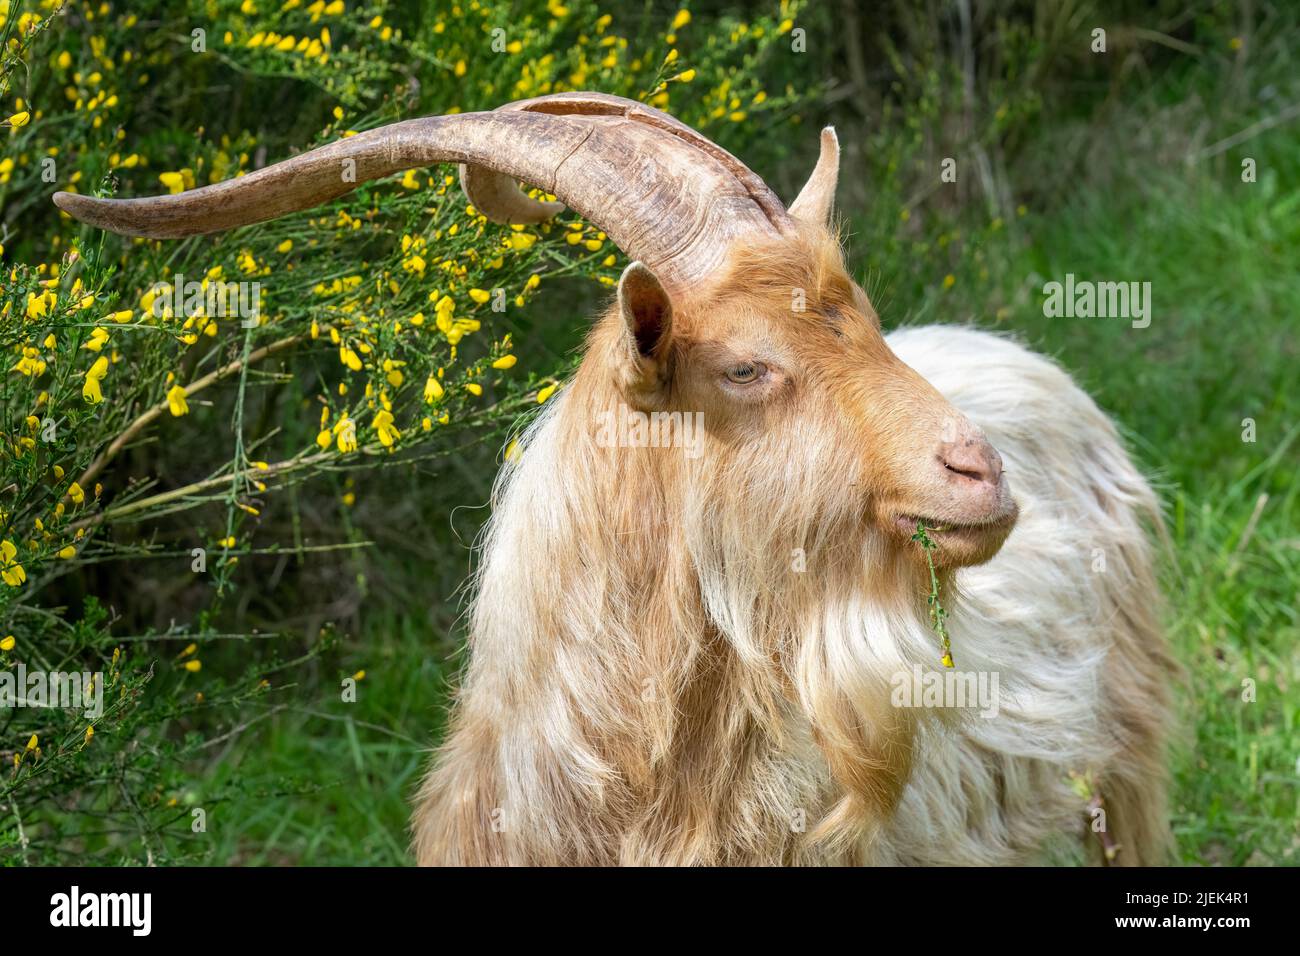 Issaquah, Washington, USA.   A rare heritage breed, Golden Gurnsey billy goat, standing beside a Scotch Broom shrub. Stock Photo